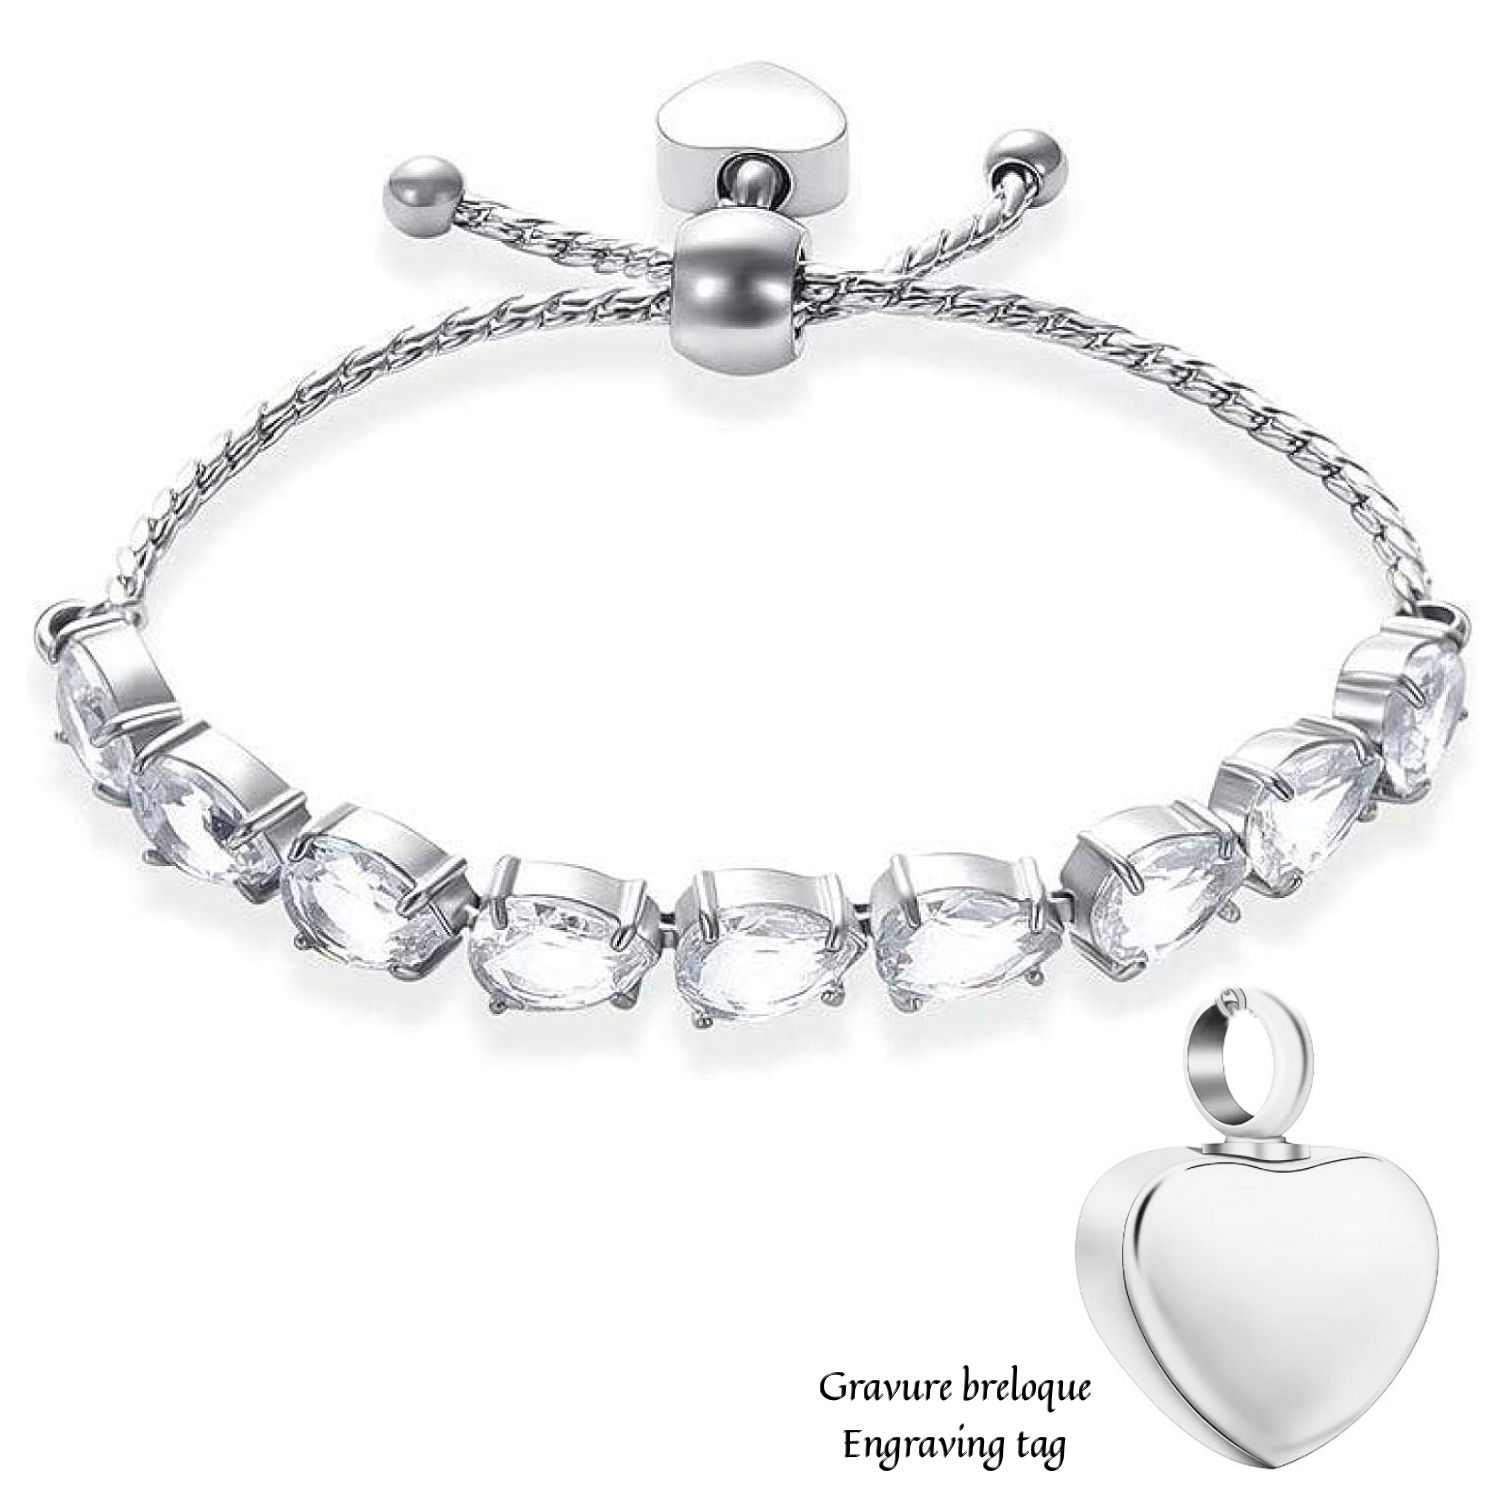 The heart bracelet birth - Origine Gravure